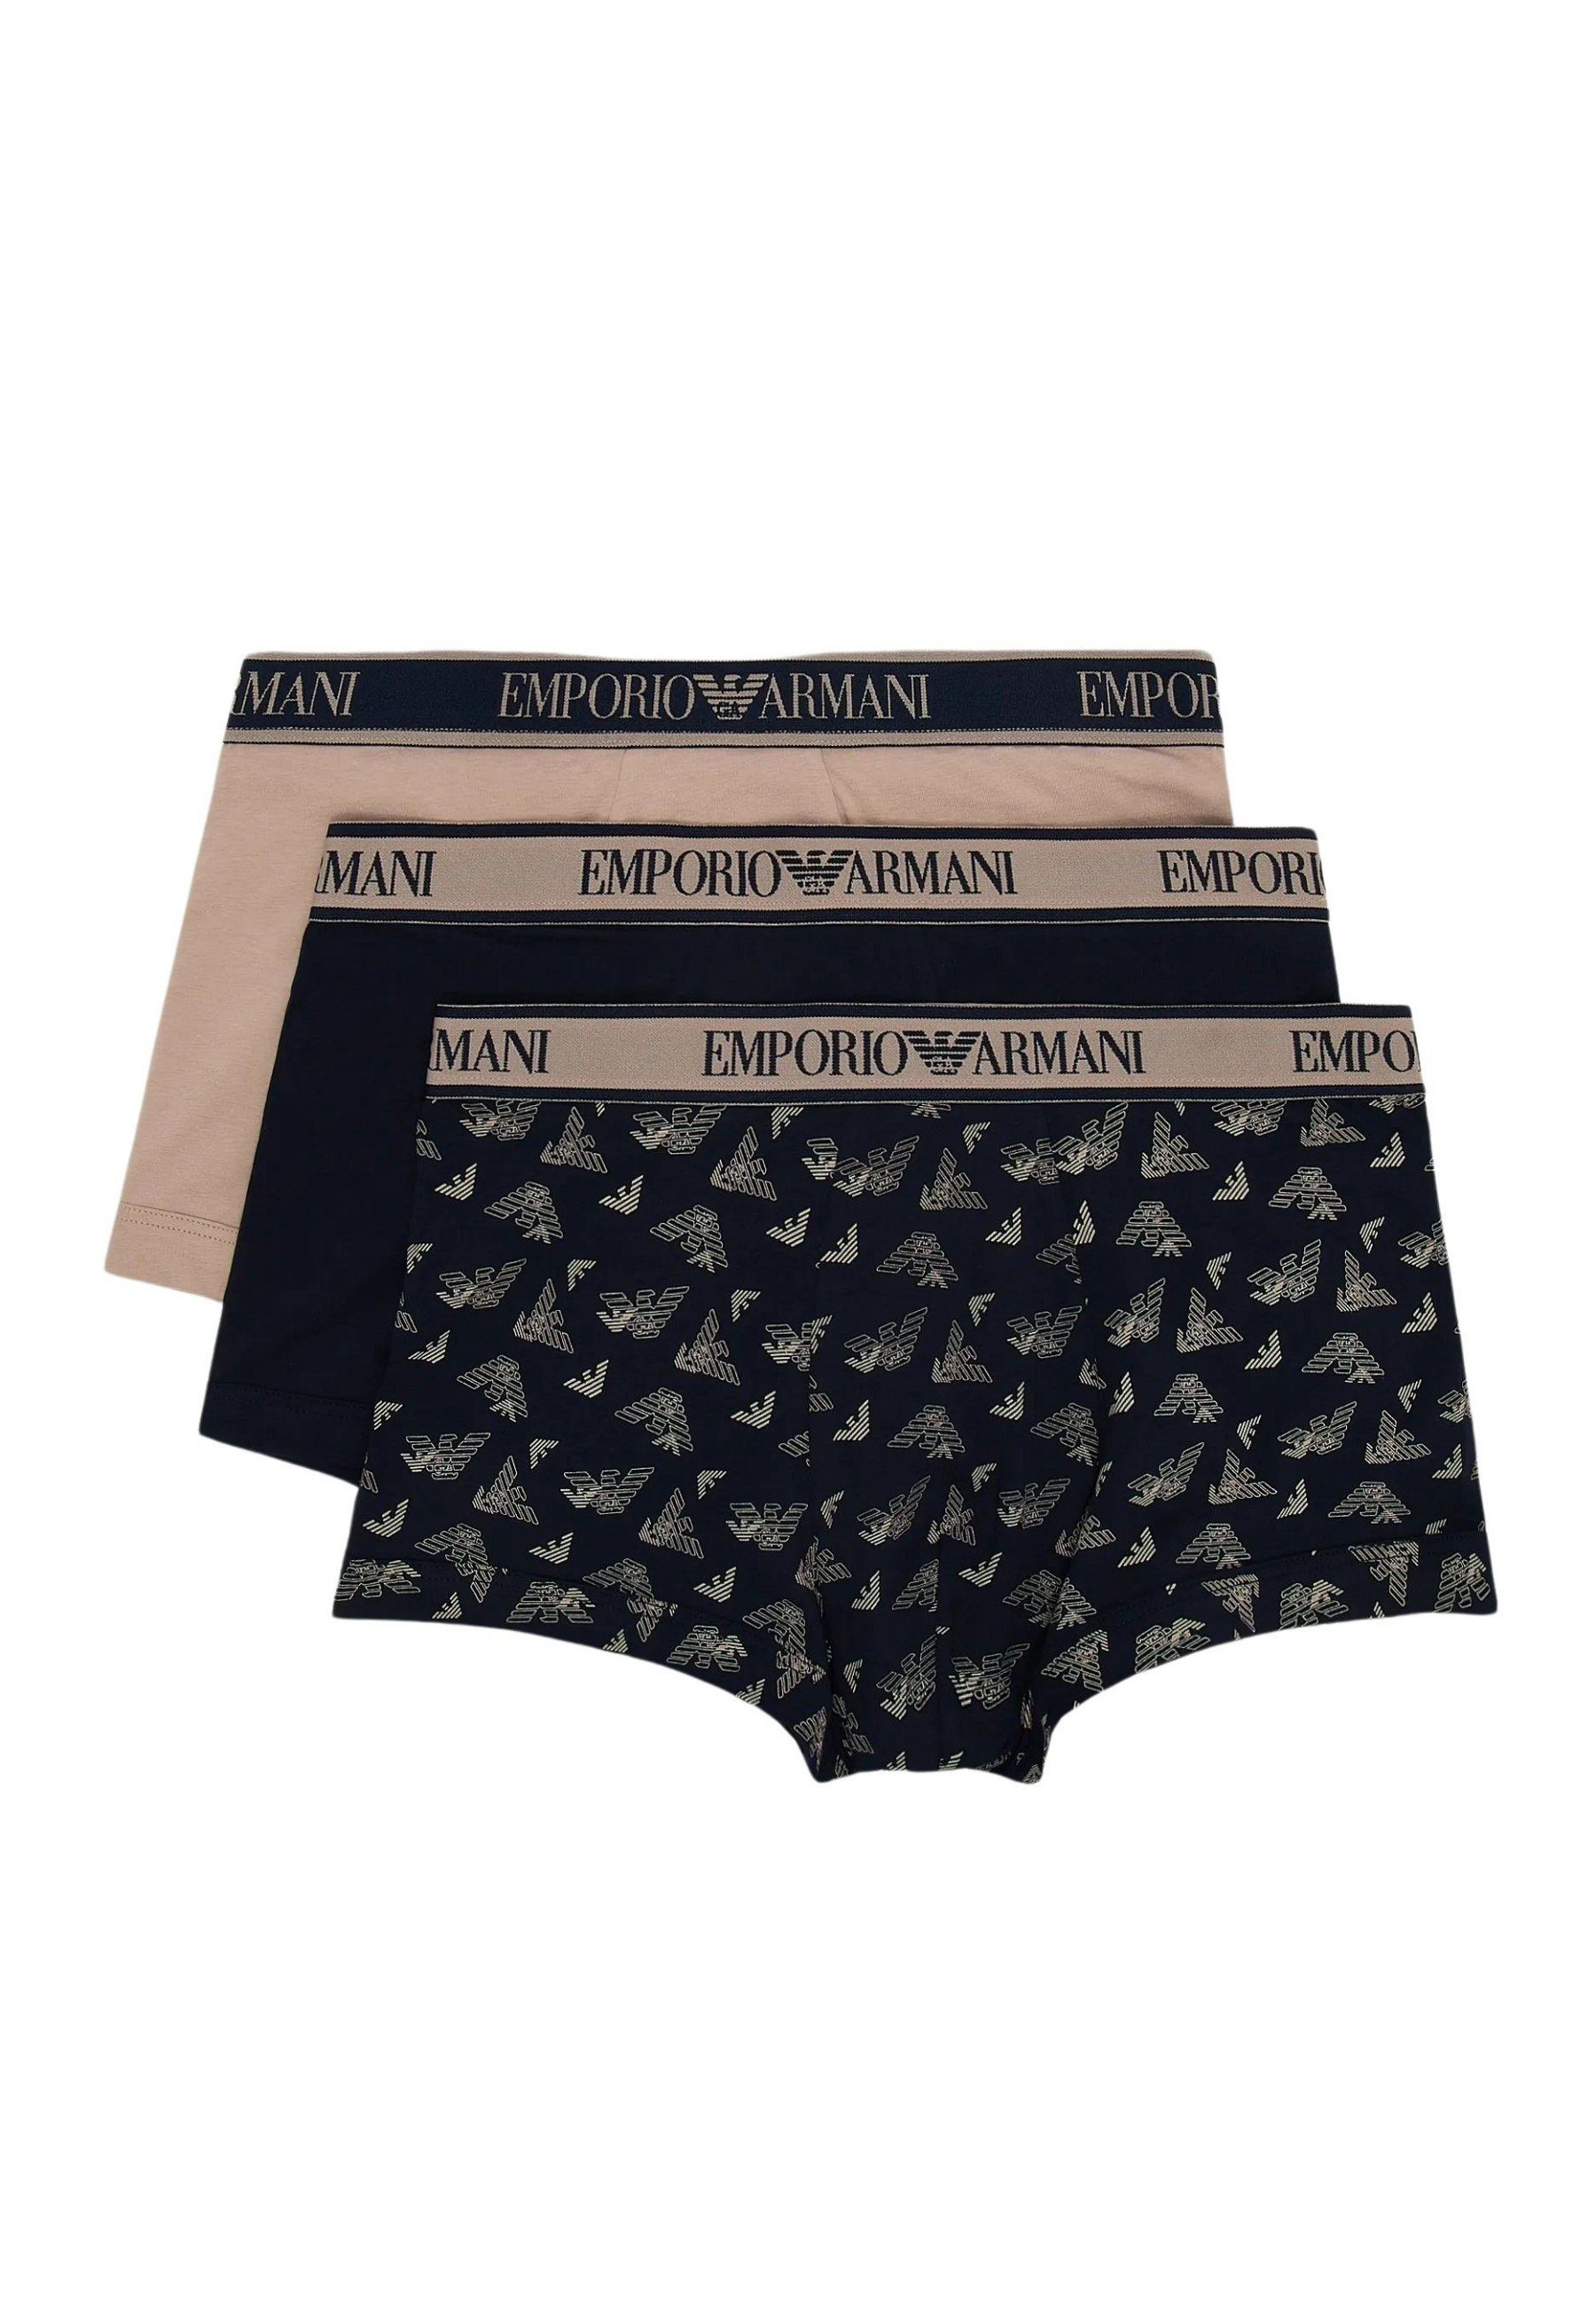 Knit Emporio Pack Armani Trunks 3 Shorts Beige/Marine (3-St) Boxershorts